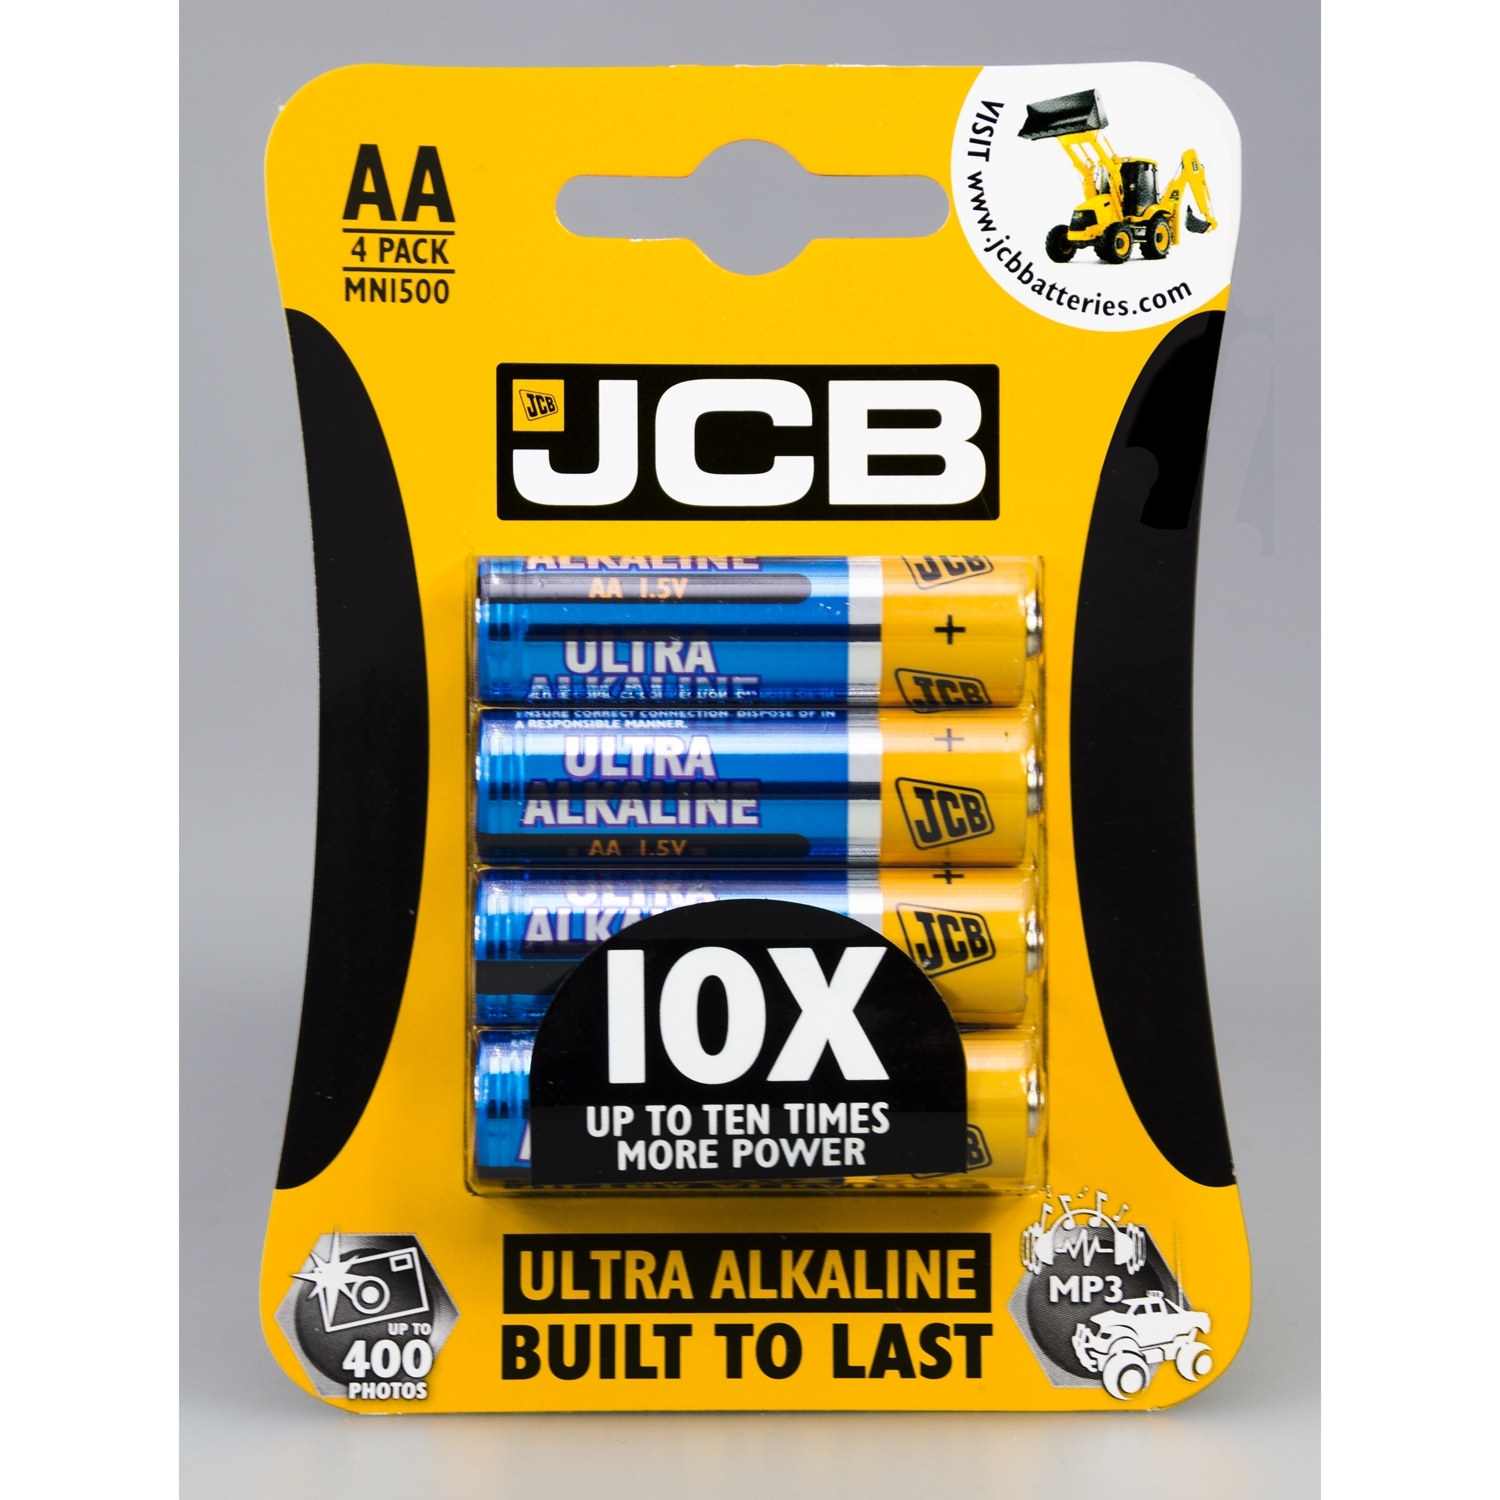 JCB AA 4 Pack Ultra Alkaline Batteries Image